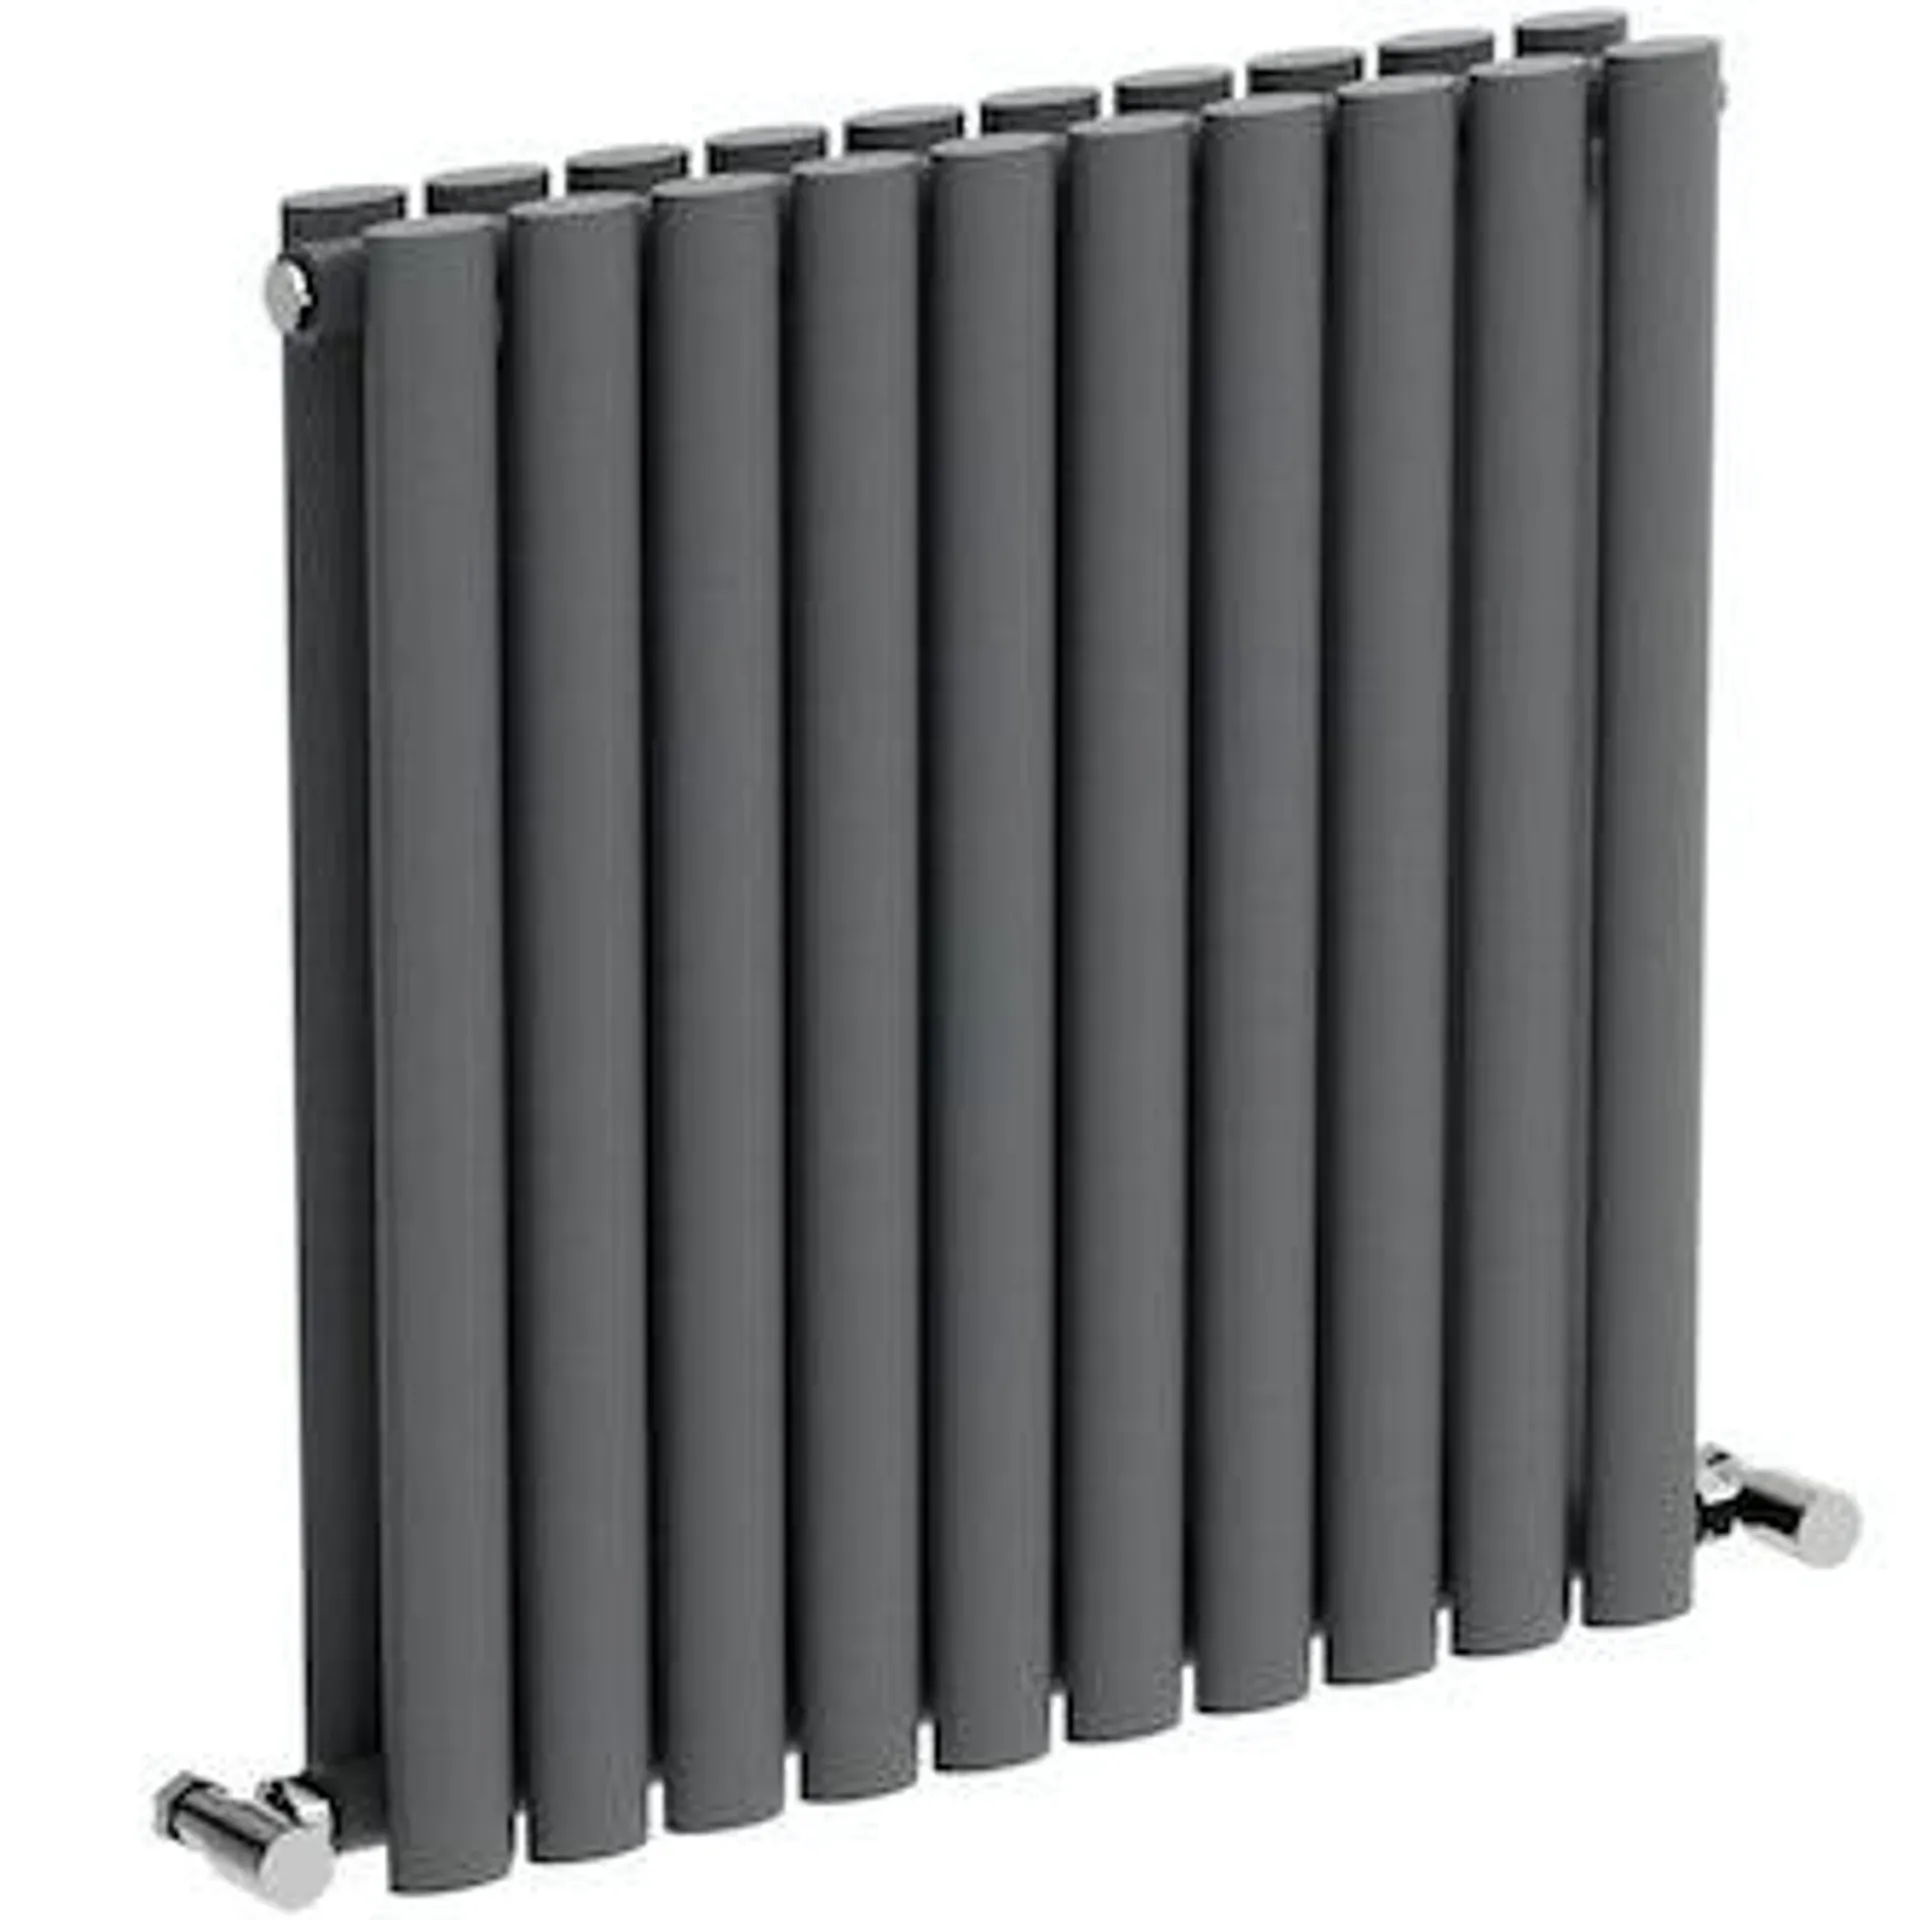 The Heating Co. Salvador anthracite grey double horizontal radiator